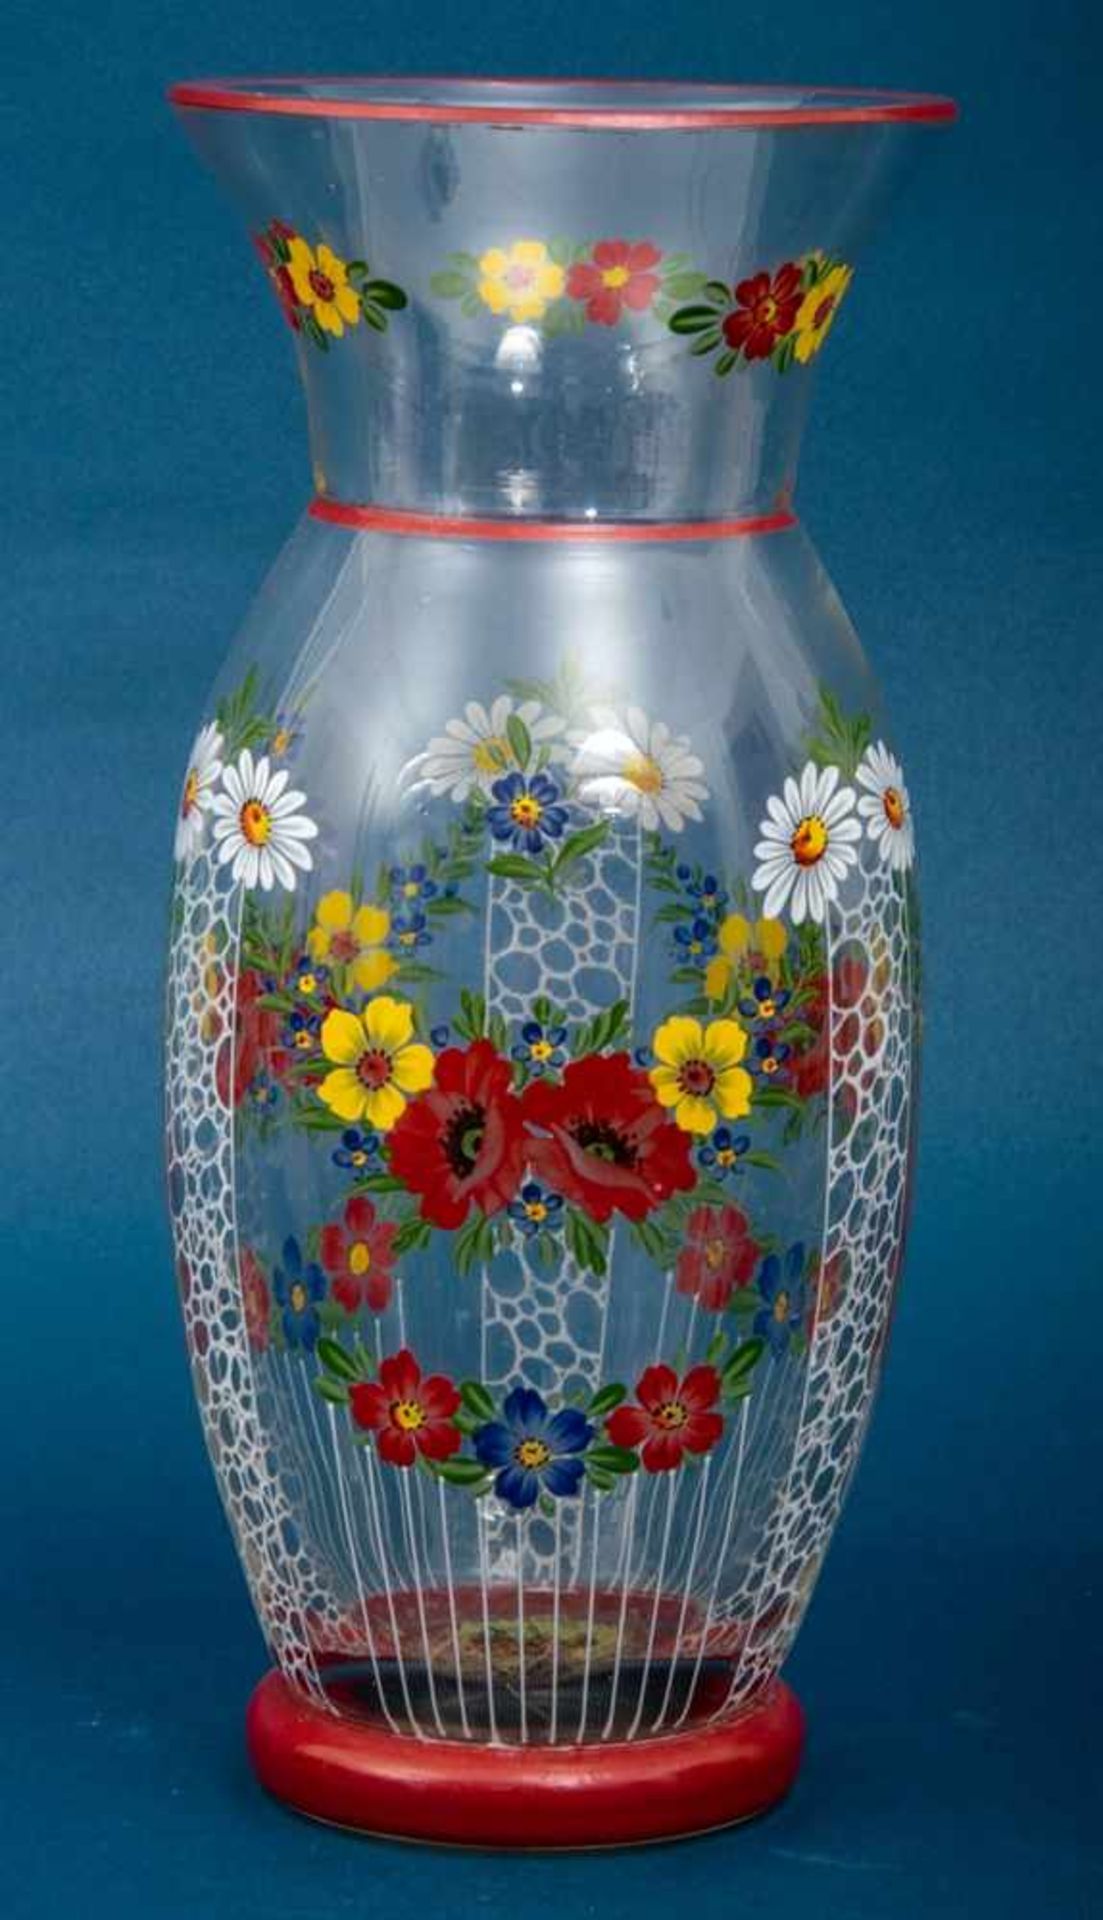 Tischvase, dickwandiges, farbloses Klarglas, 1920er/30er Jahre, mit farbenfrohem Floraldekor bemalt.